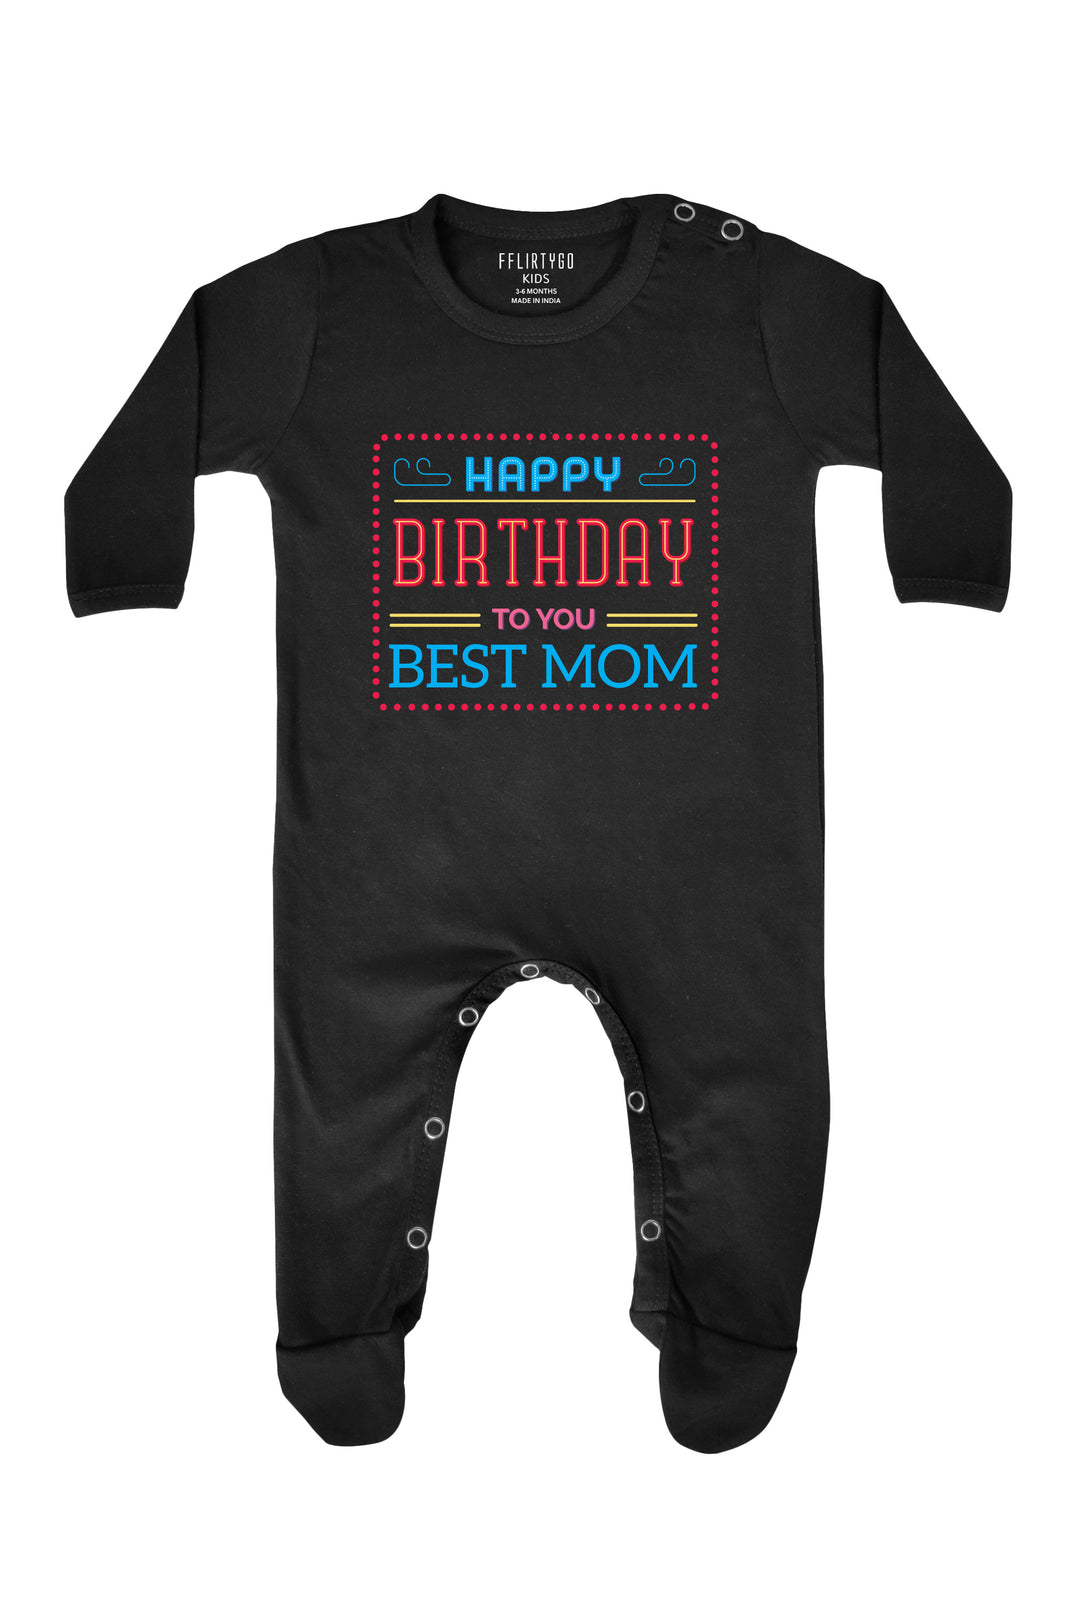 Happy Birthday Best Mom Baby Romper | Onesies